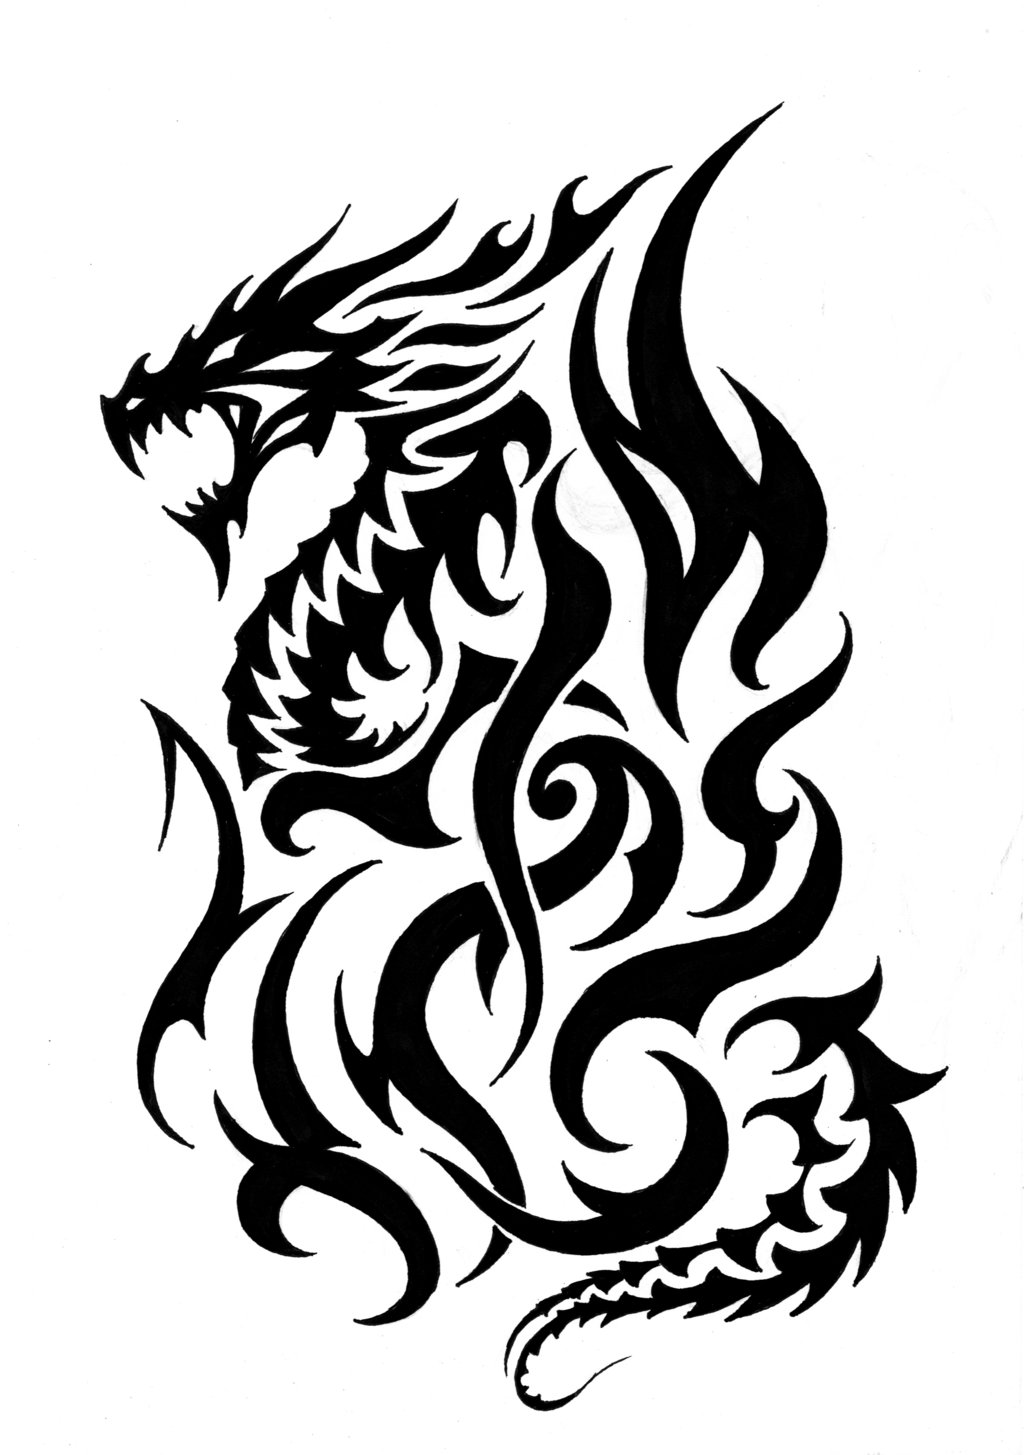 dragon fire silhouette